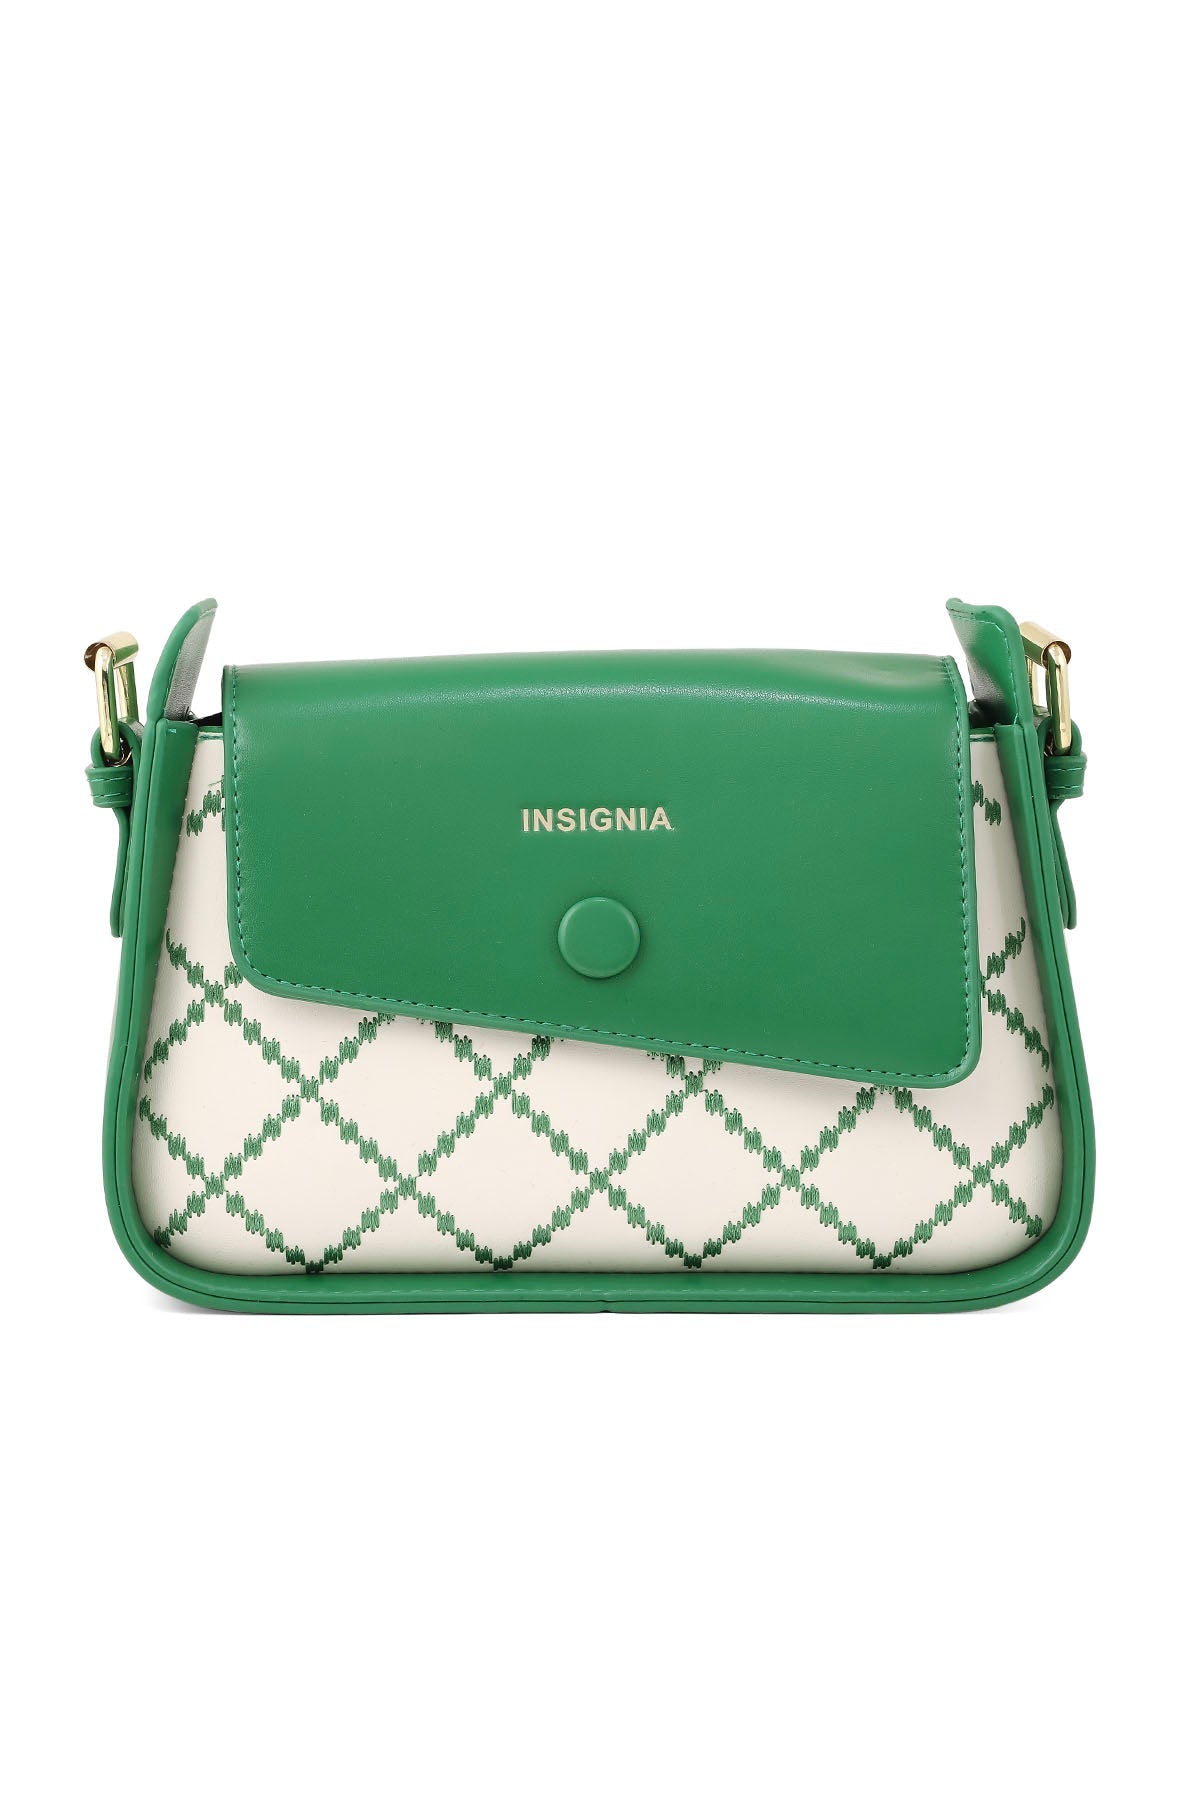 Cross Shoulder Bags B14954-Green